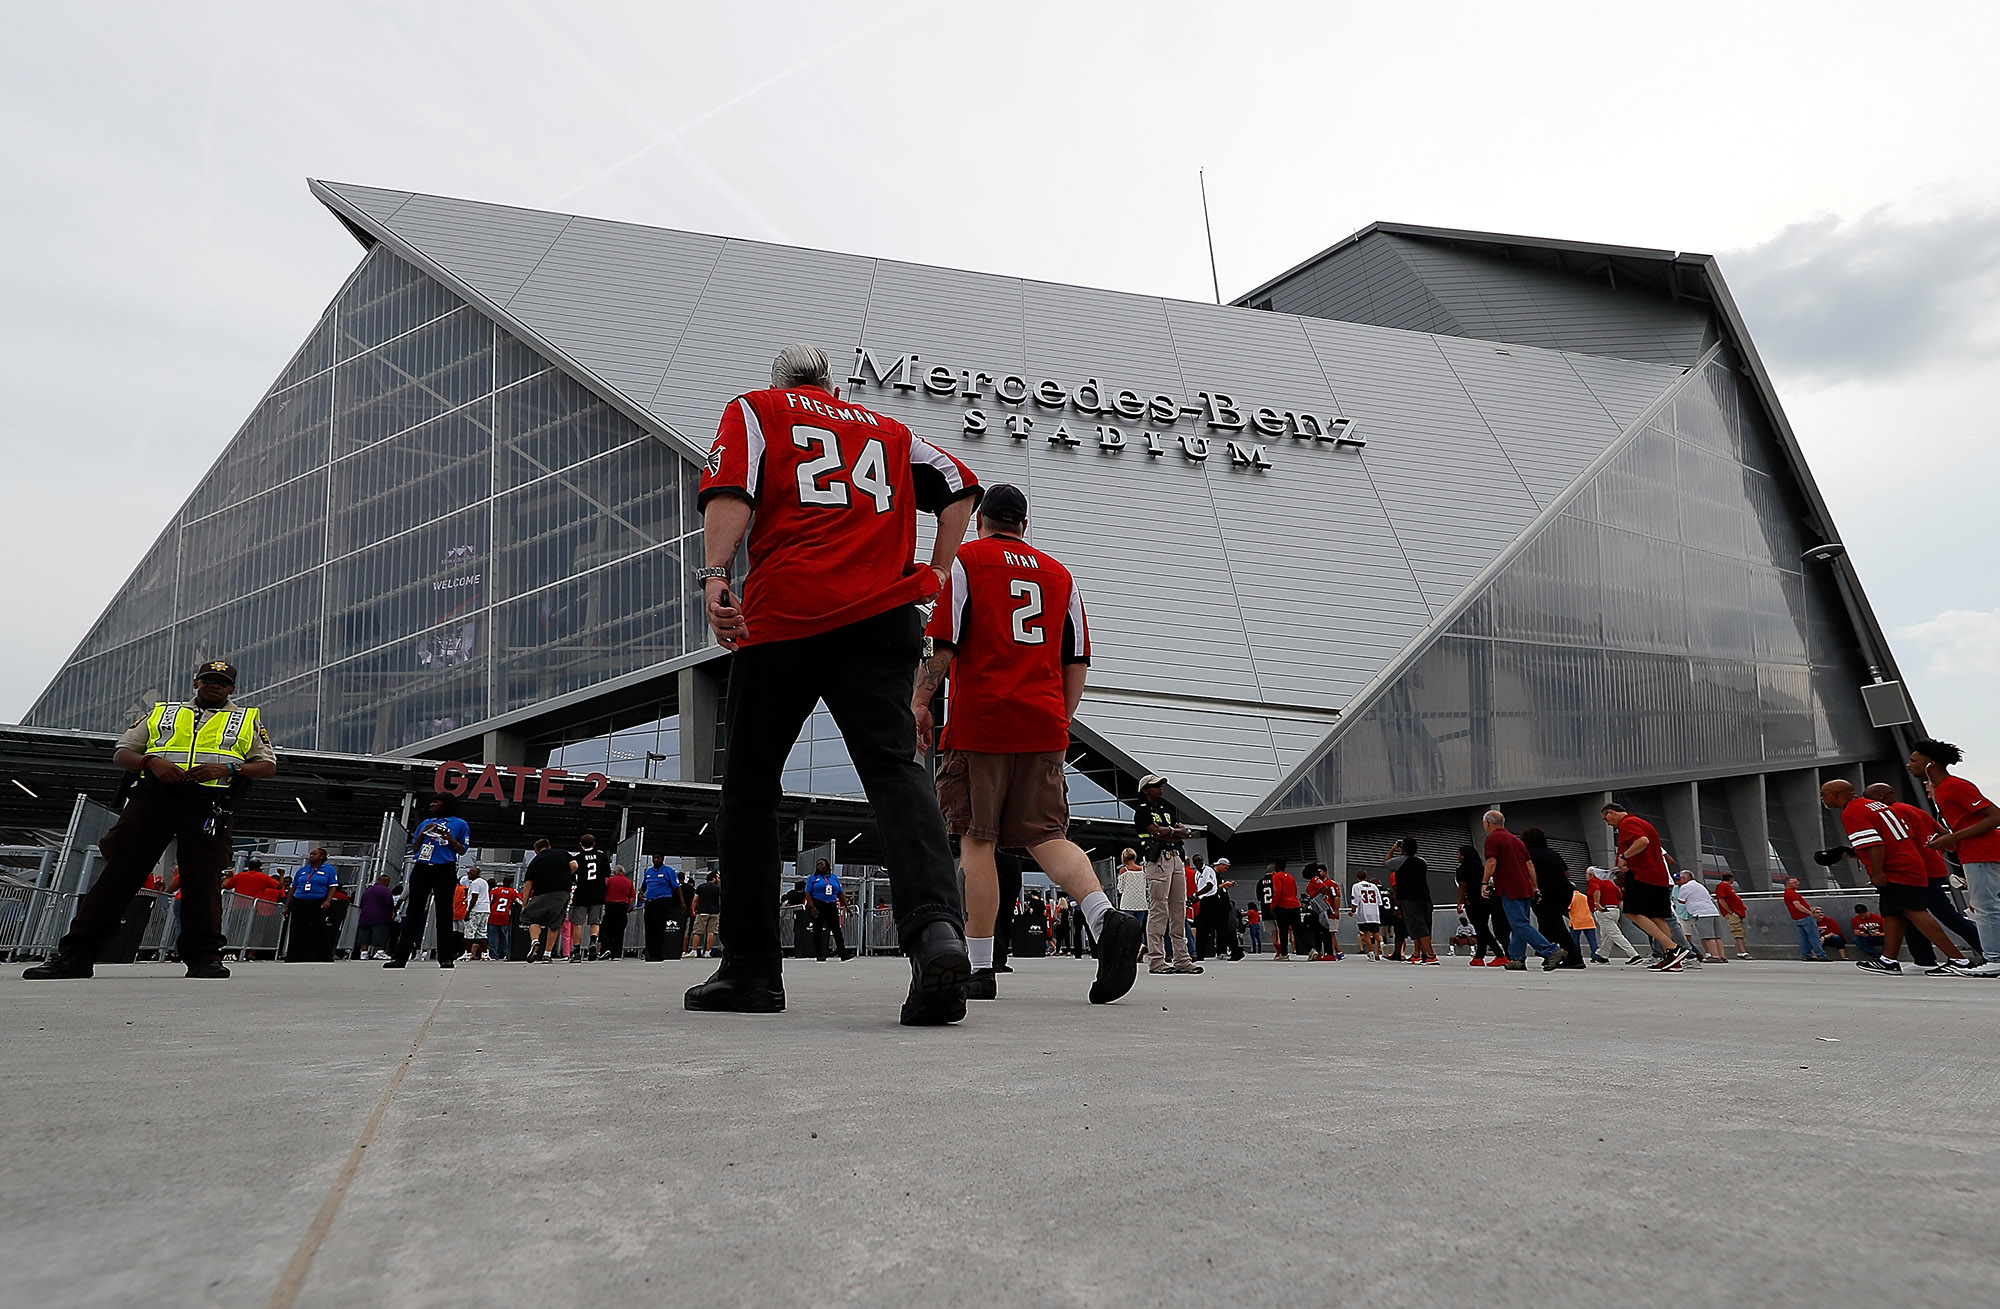 Atlanta stadium goes cash-free